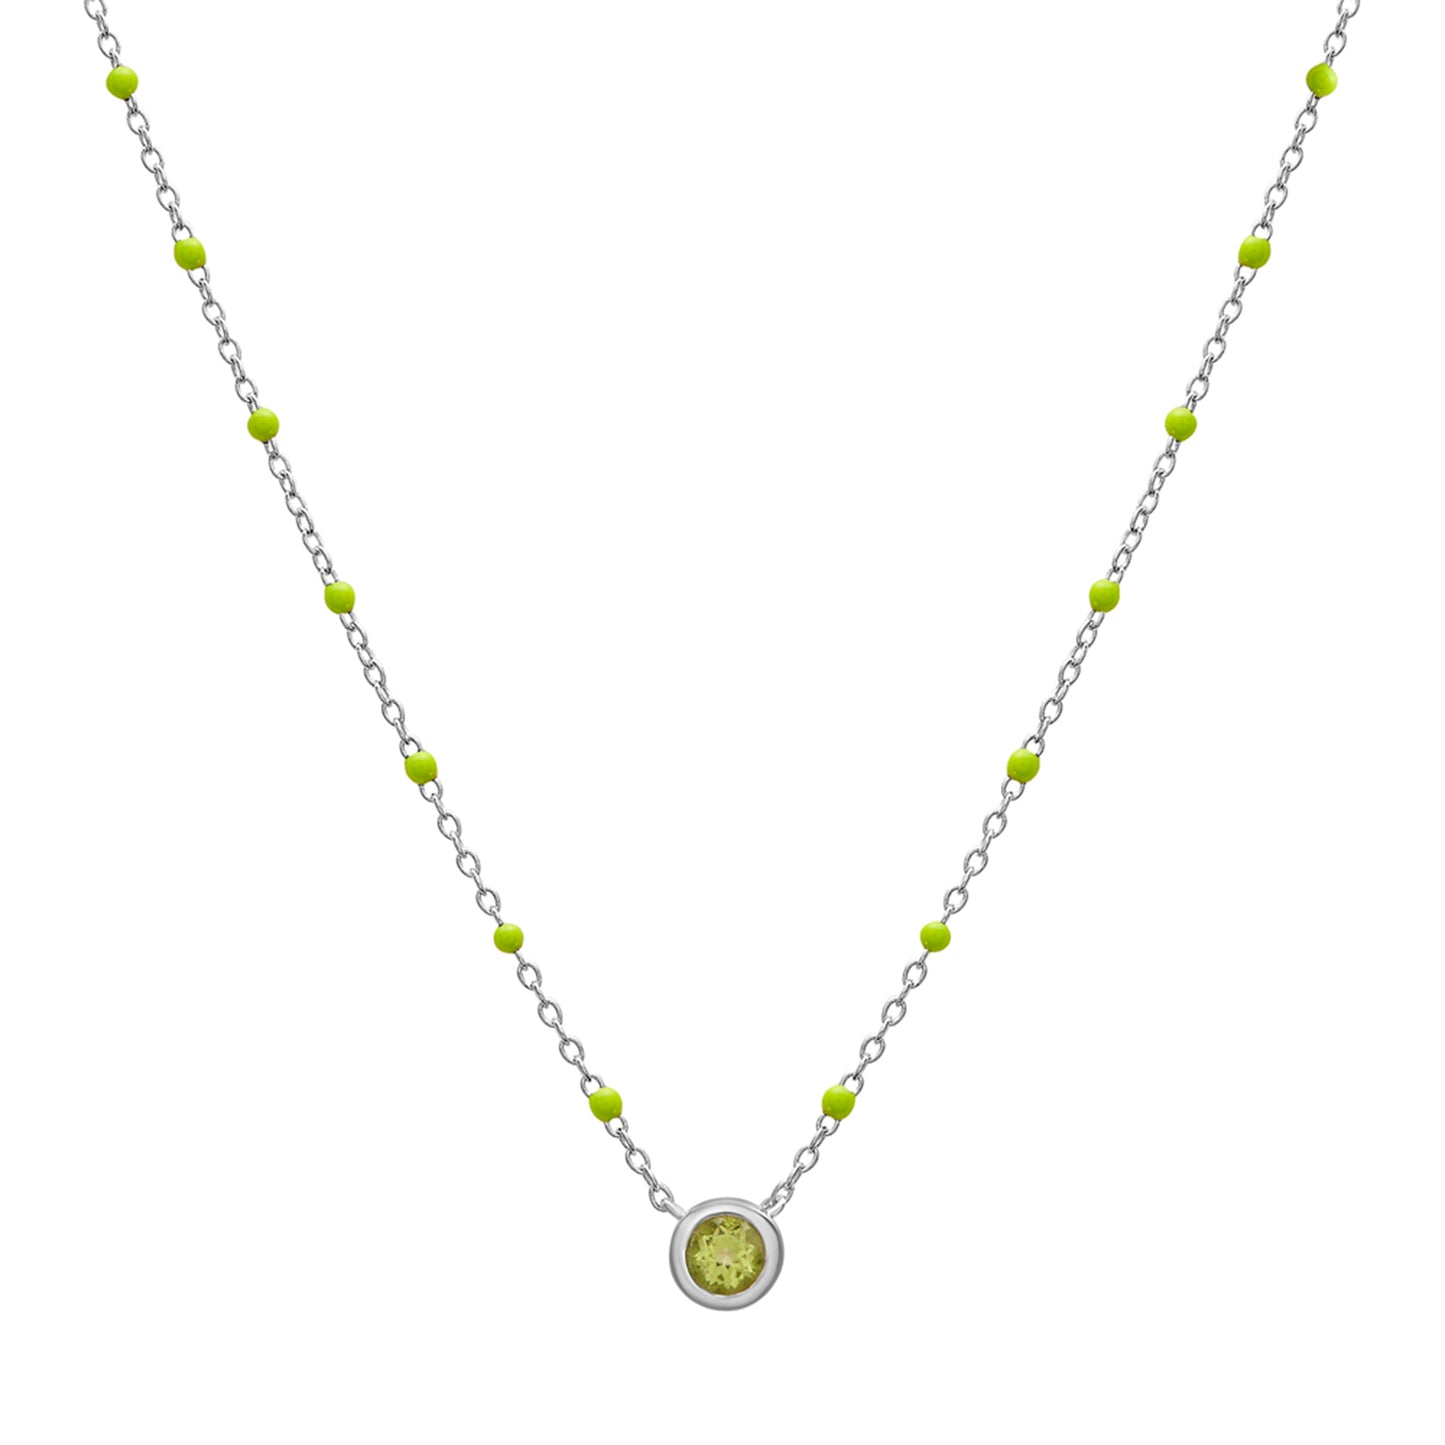 Birthstone Enamel Necklaces in light green stone